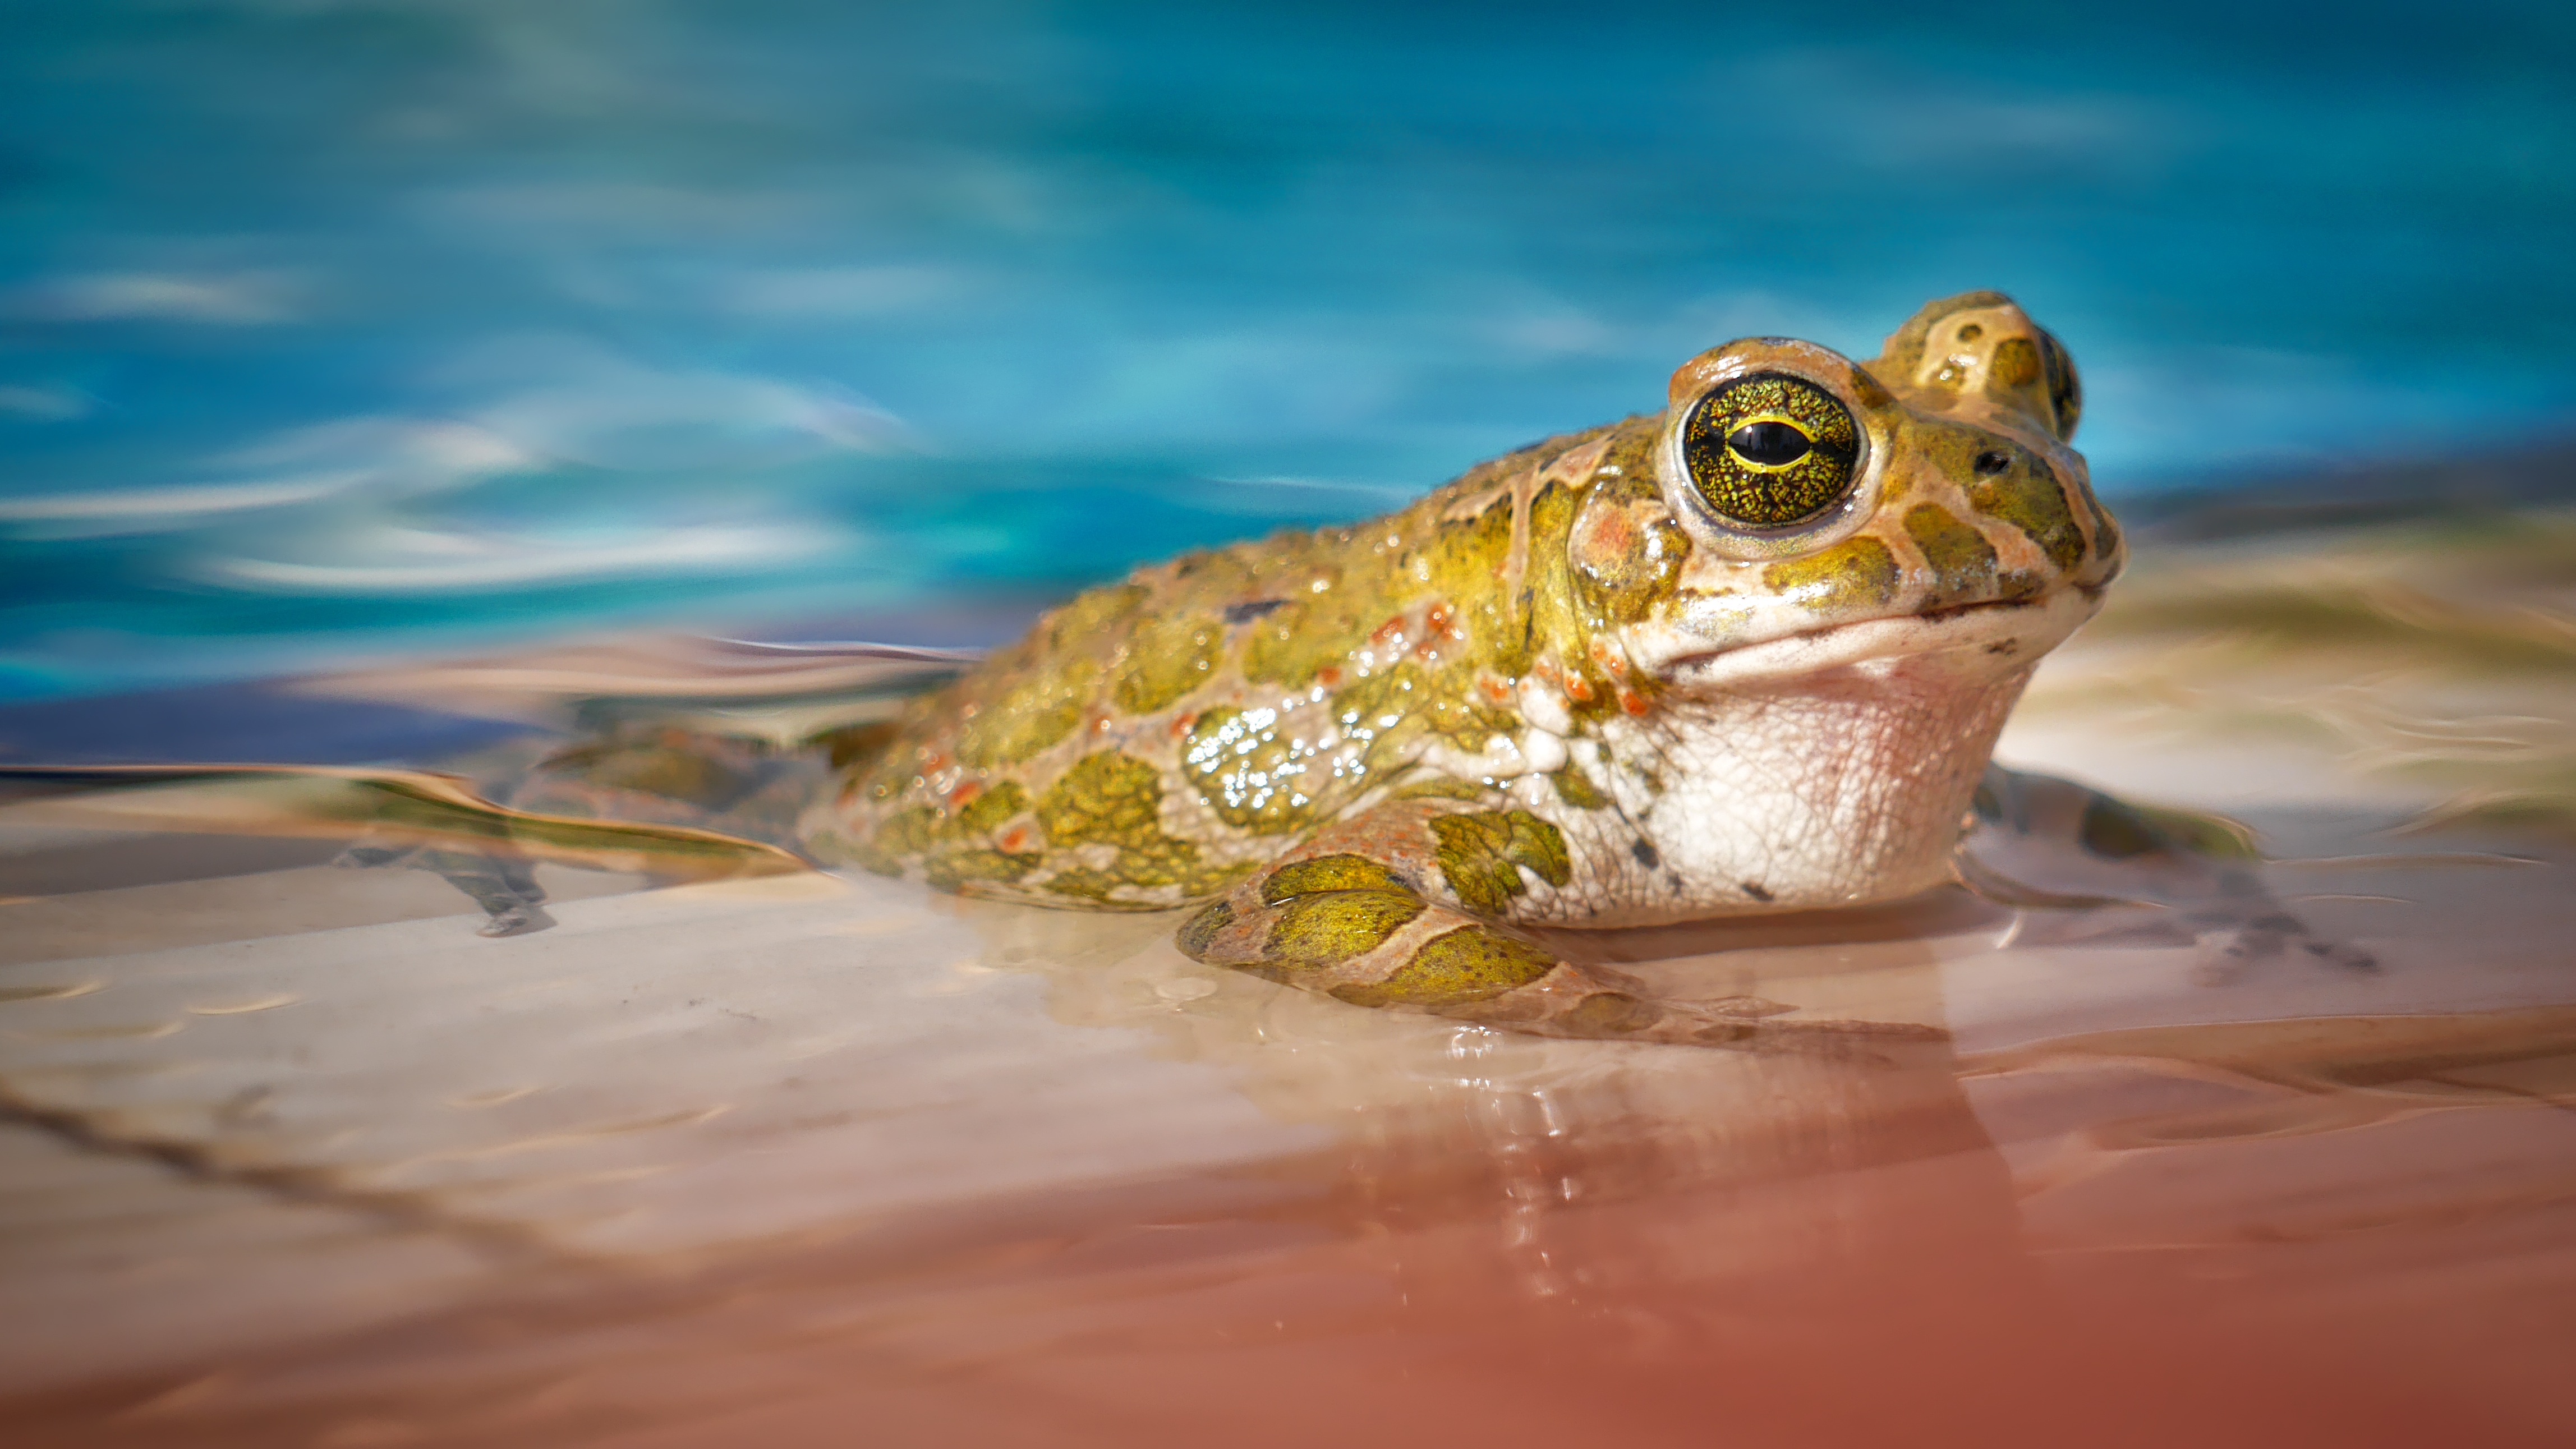 Zastaki.com - Зеленая жаба сидит в голубой воде